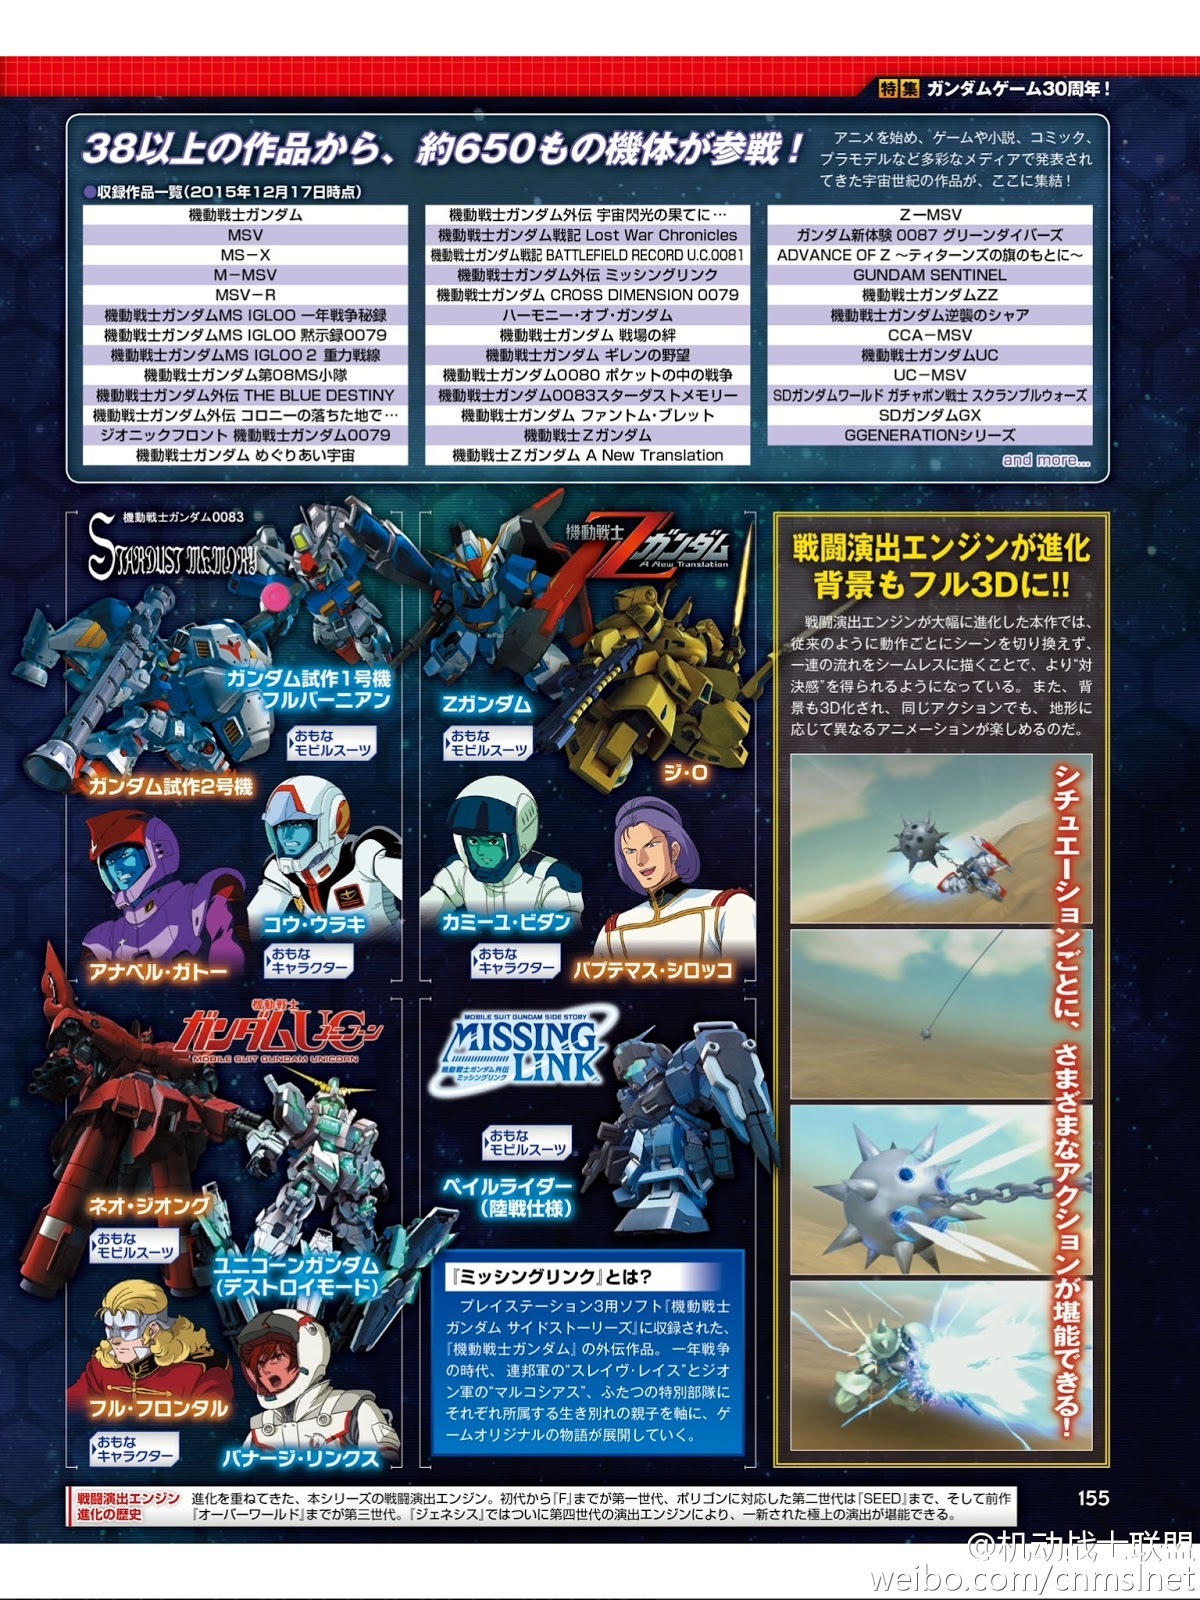 Ps4 Psv Sd Gundam G Generation Genesis討論區 5 香港高登討論區